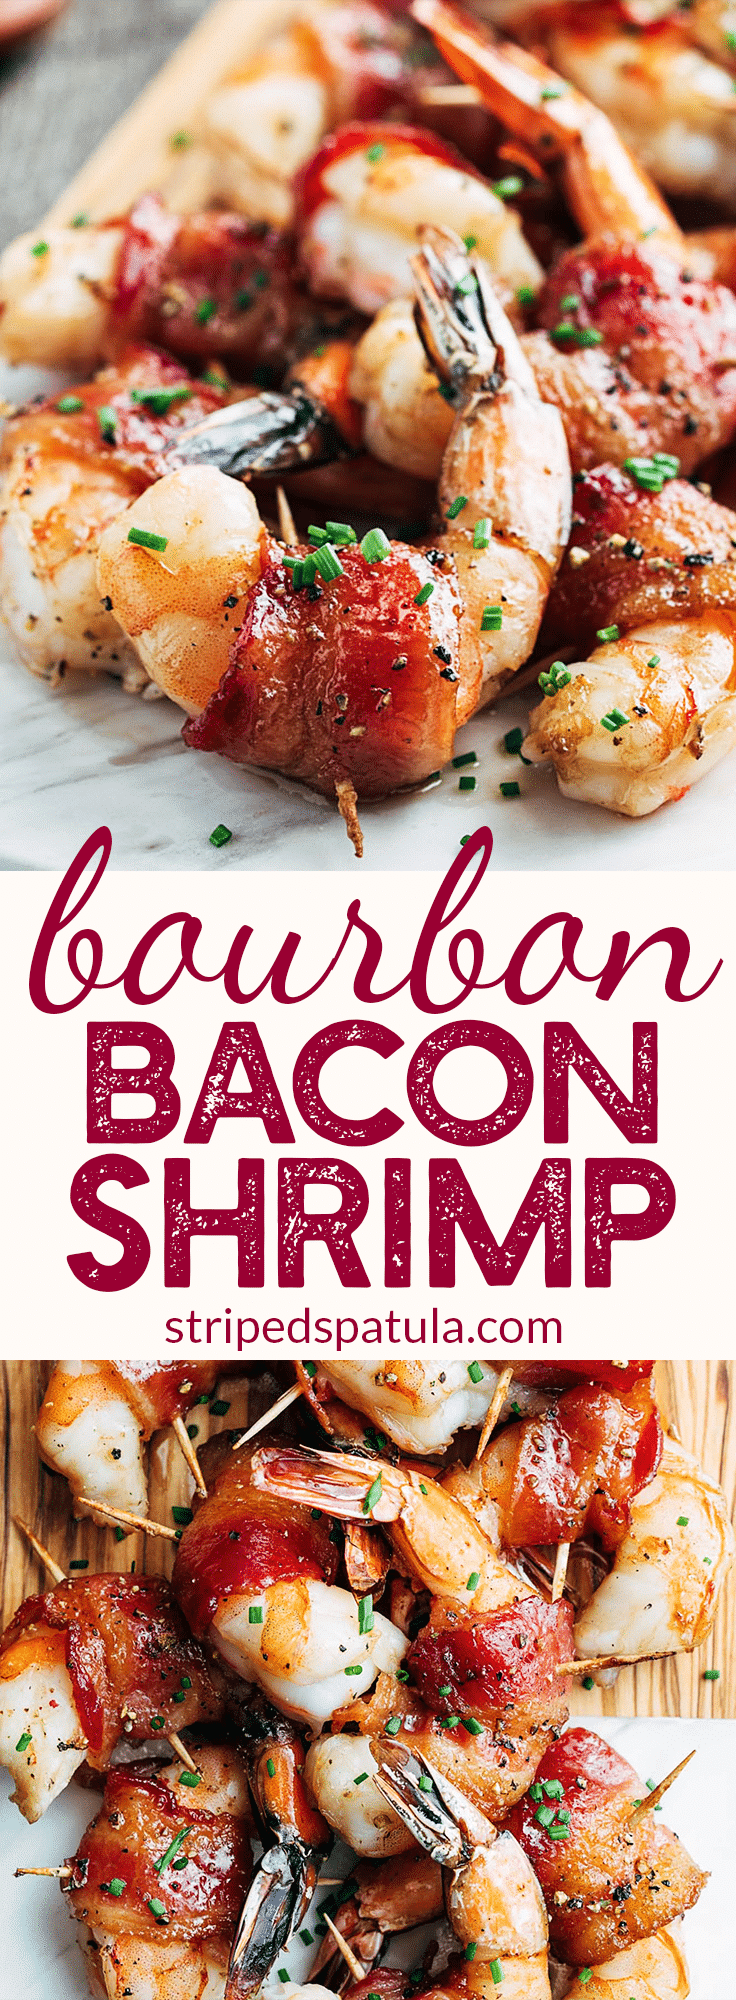 Bacon Wrapped Shrimp with Bourbon Glaze | Striped Spatula